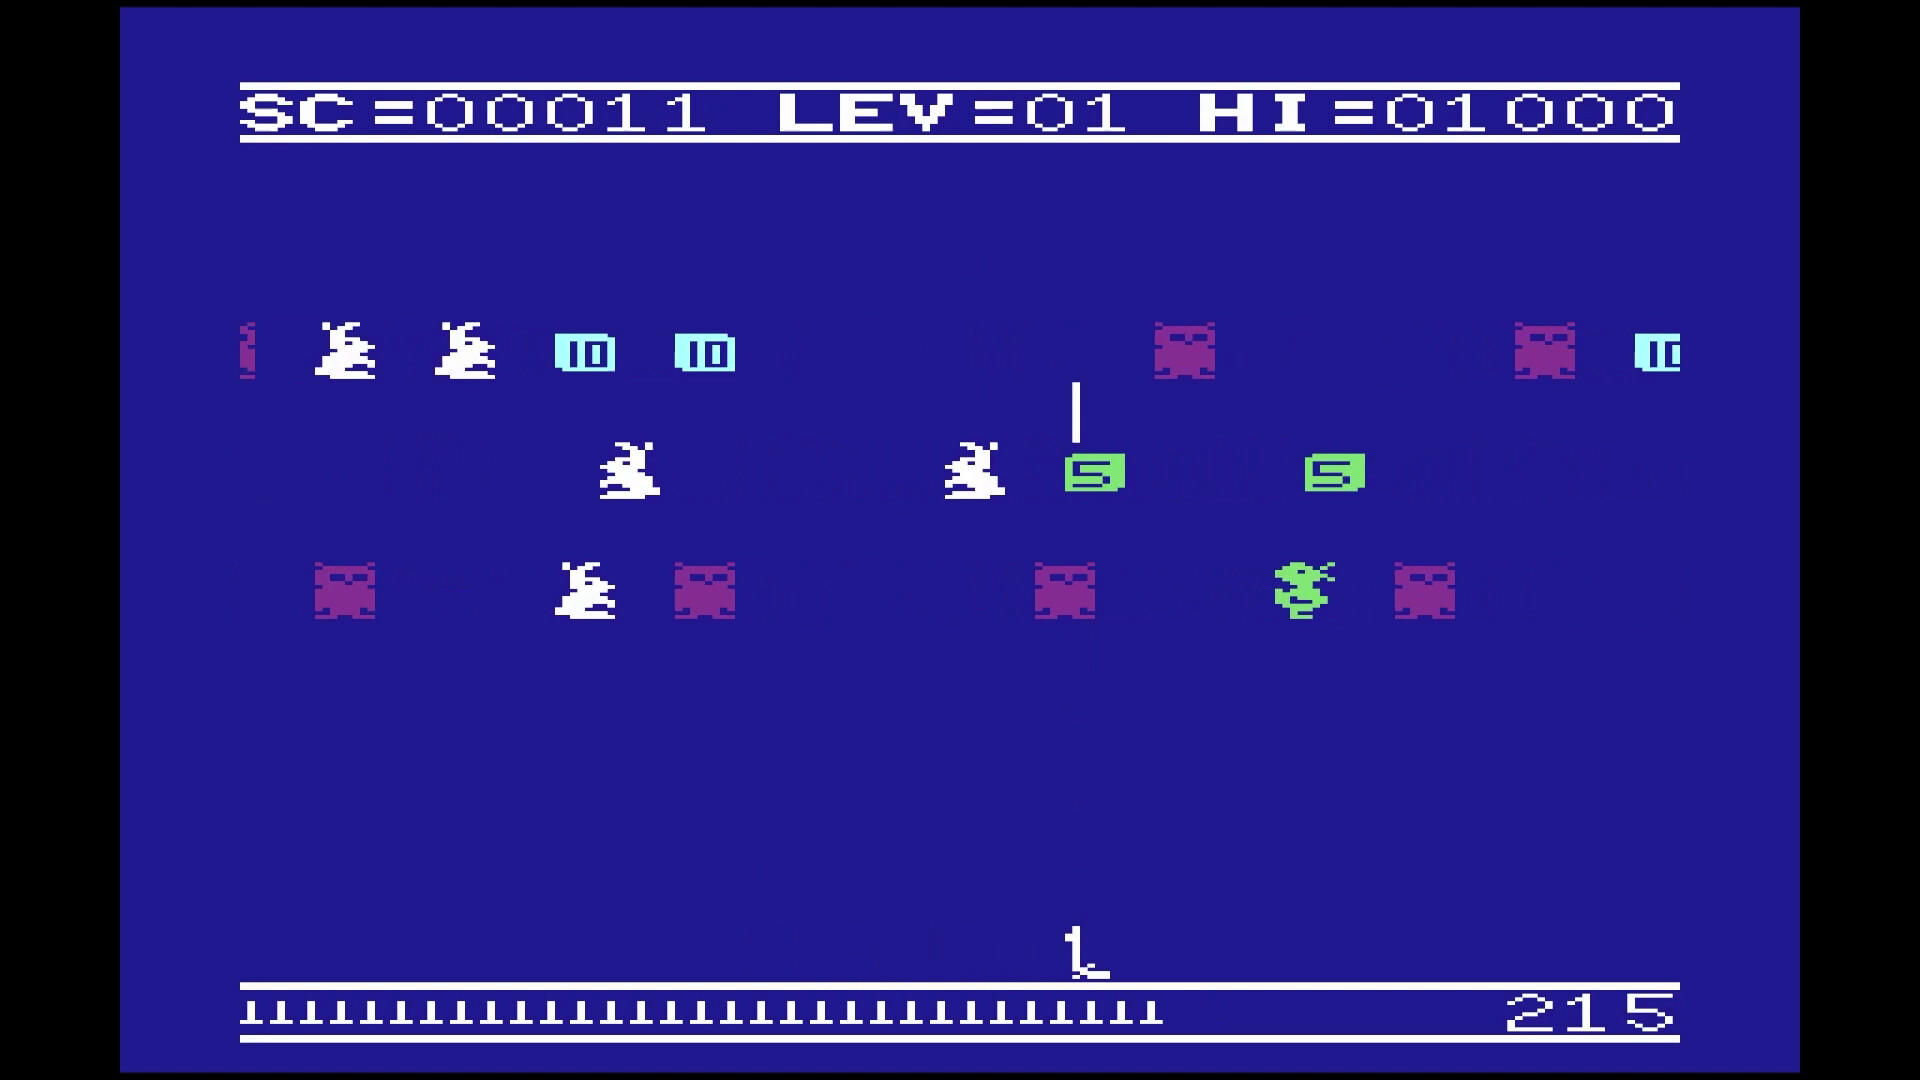 Duck Shoot (C64/VIC-20) 게임 스크린 샷